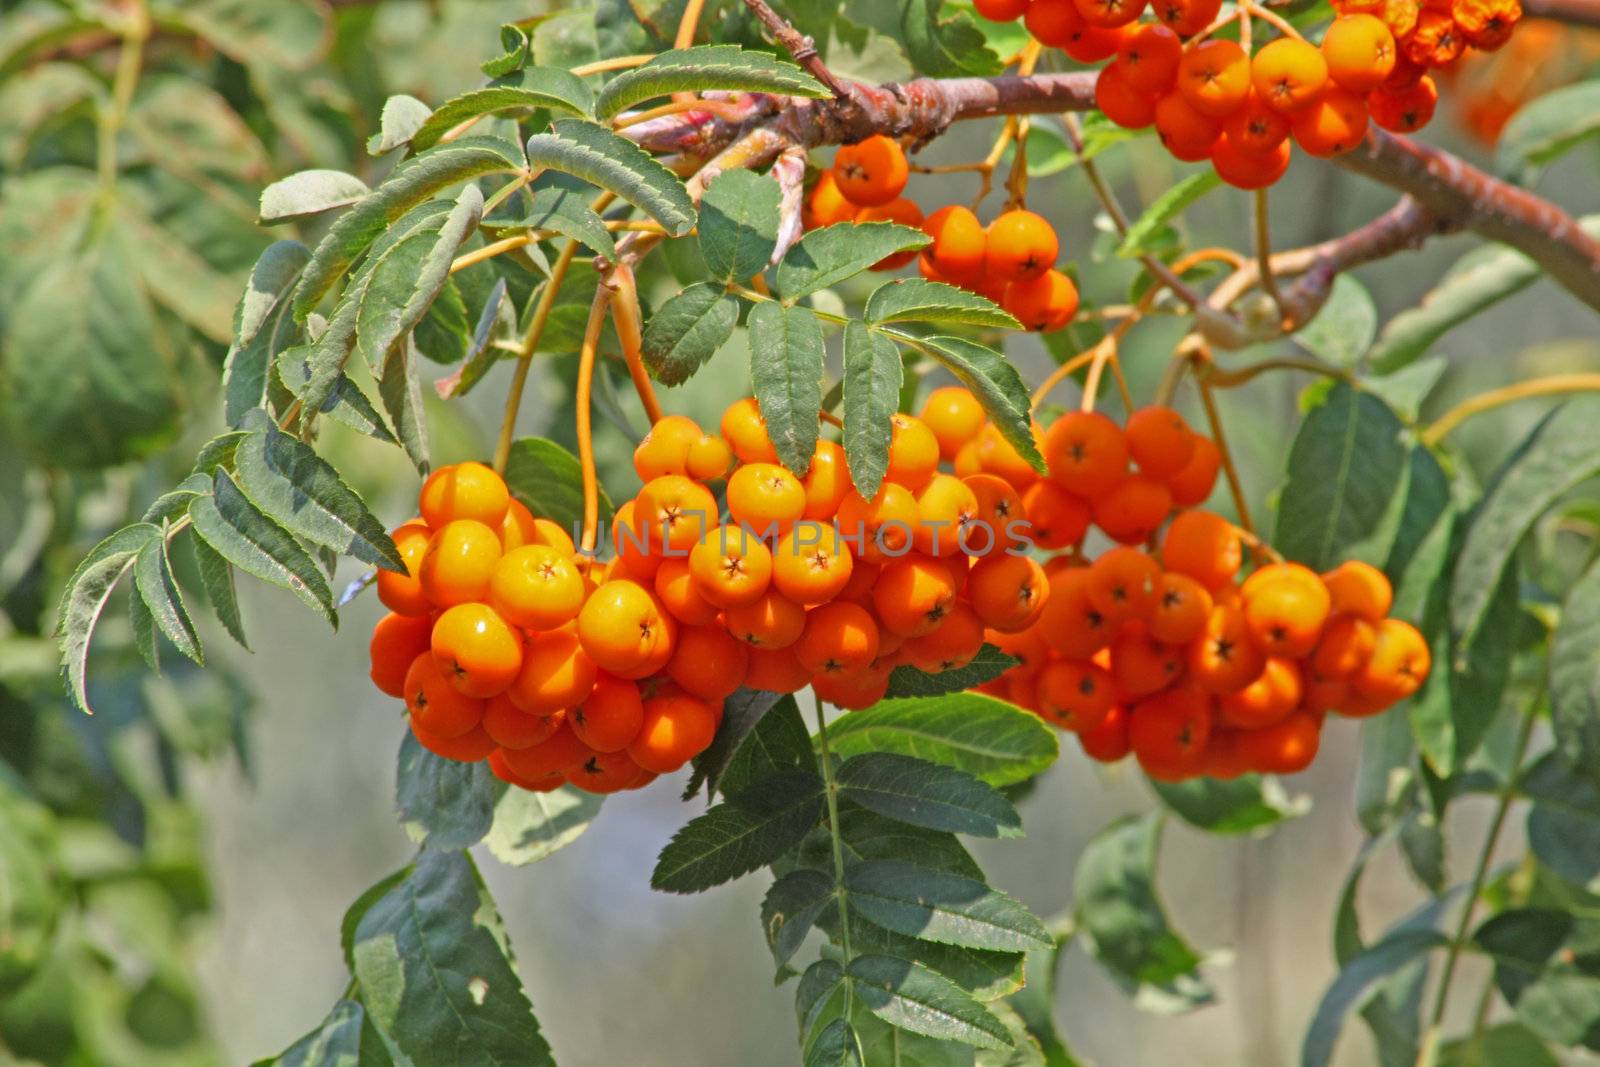 Rowan berry bunch by Lessadar